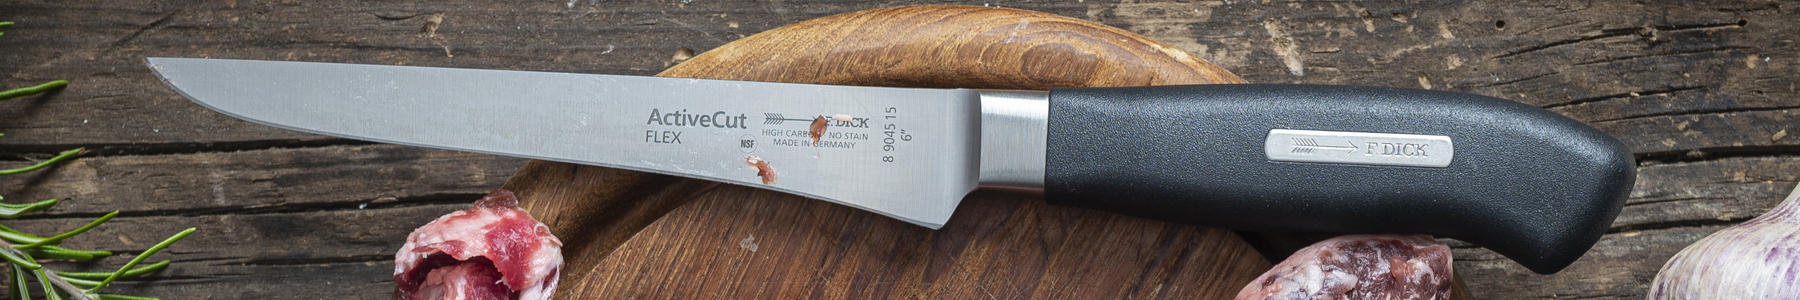 FDick Active Cut boning knife